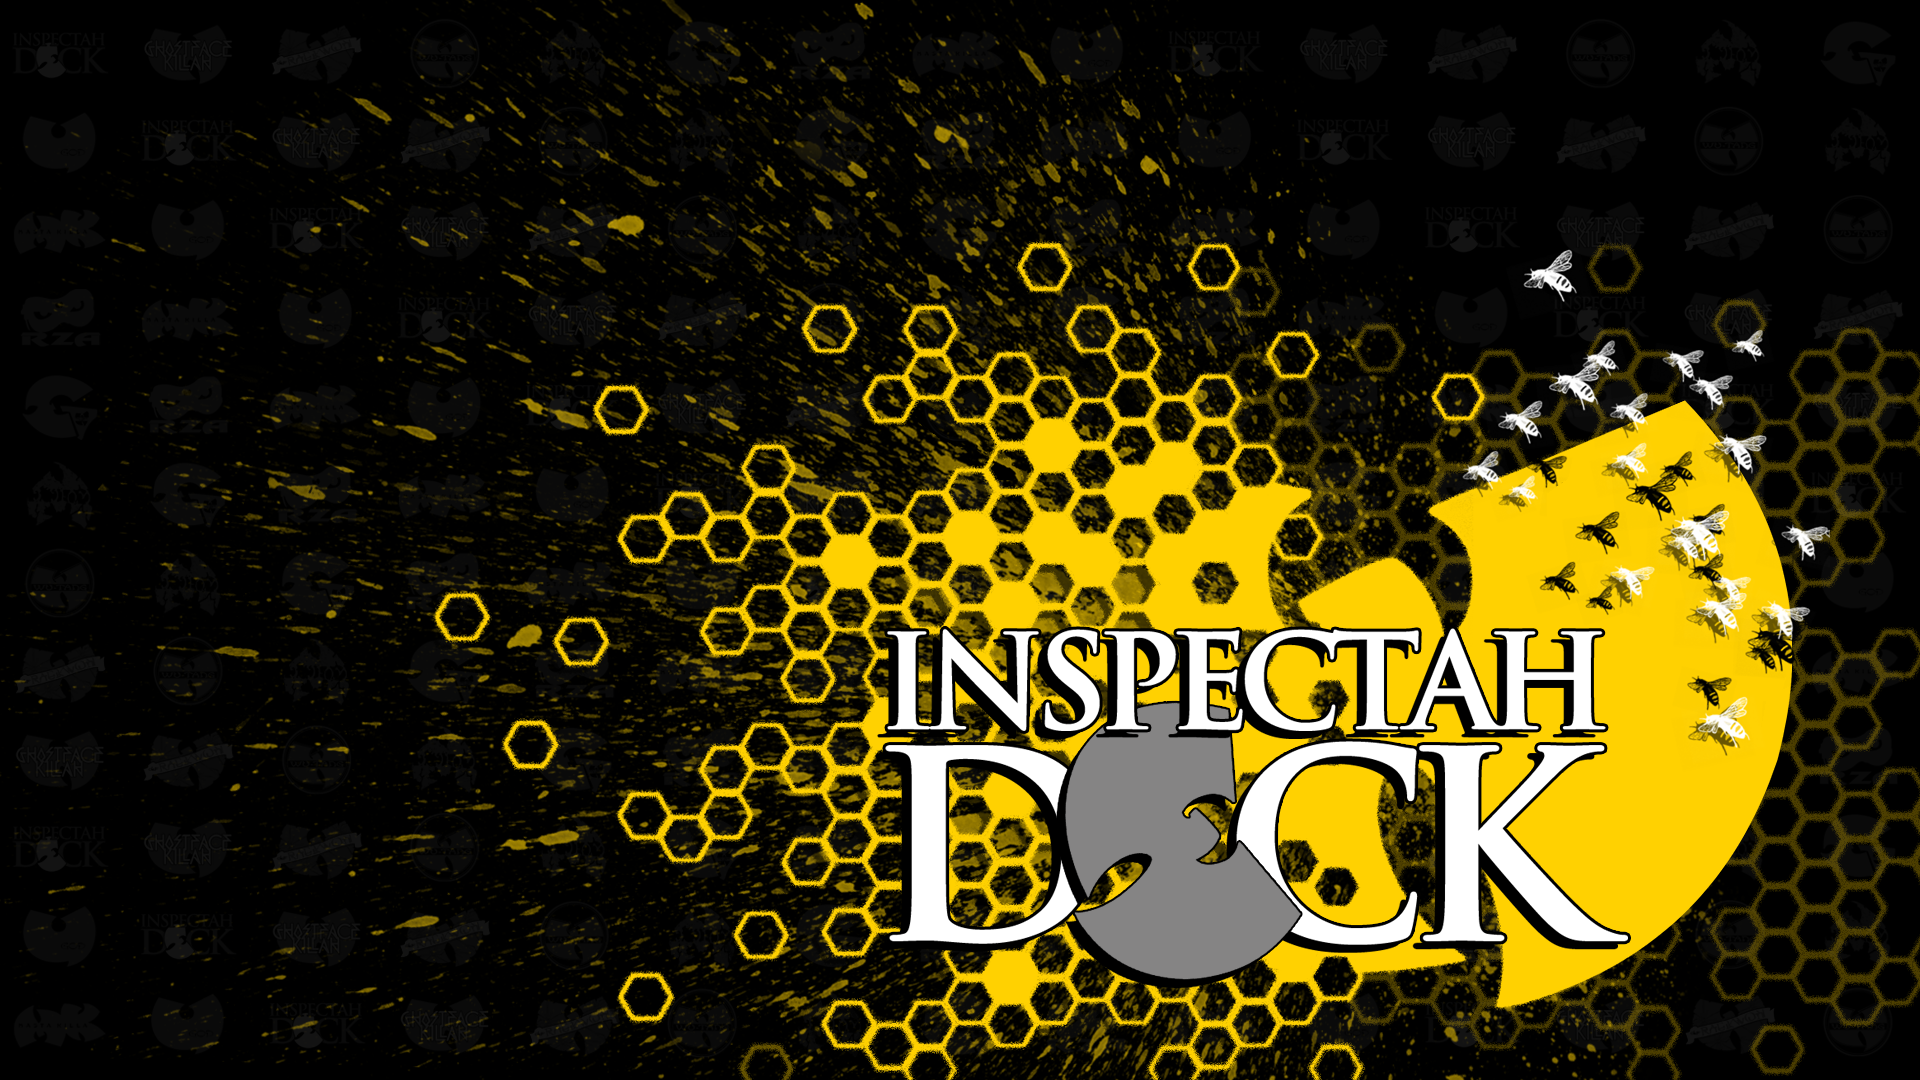 Wu-Tang Clan Logos: Inspectah Deck by uLtRaMa6nEt1cART on DeviantArt